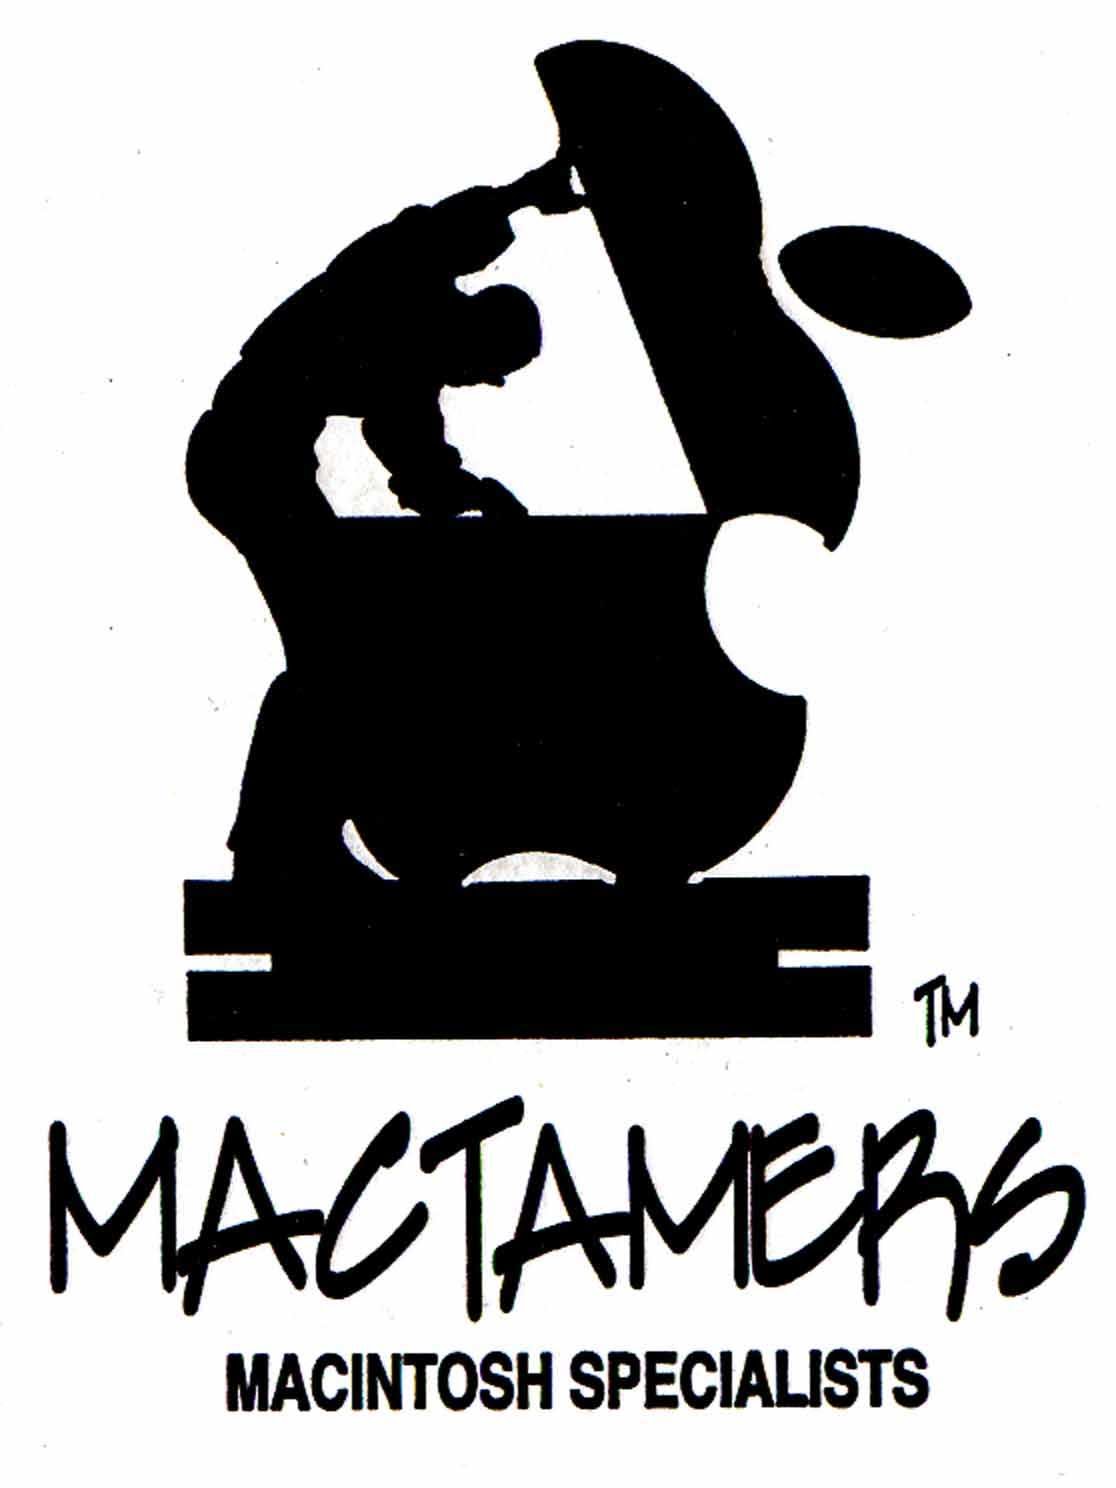 Mactamers Macintosh Specialists